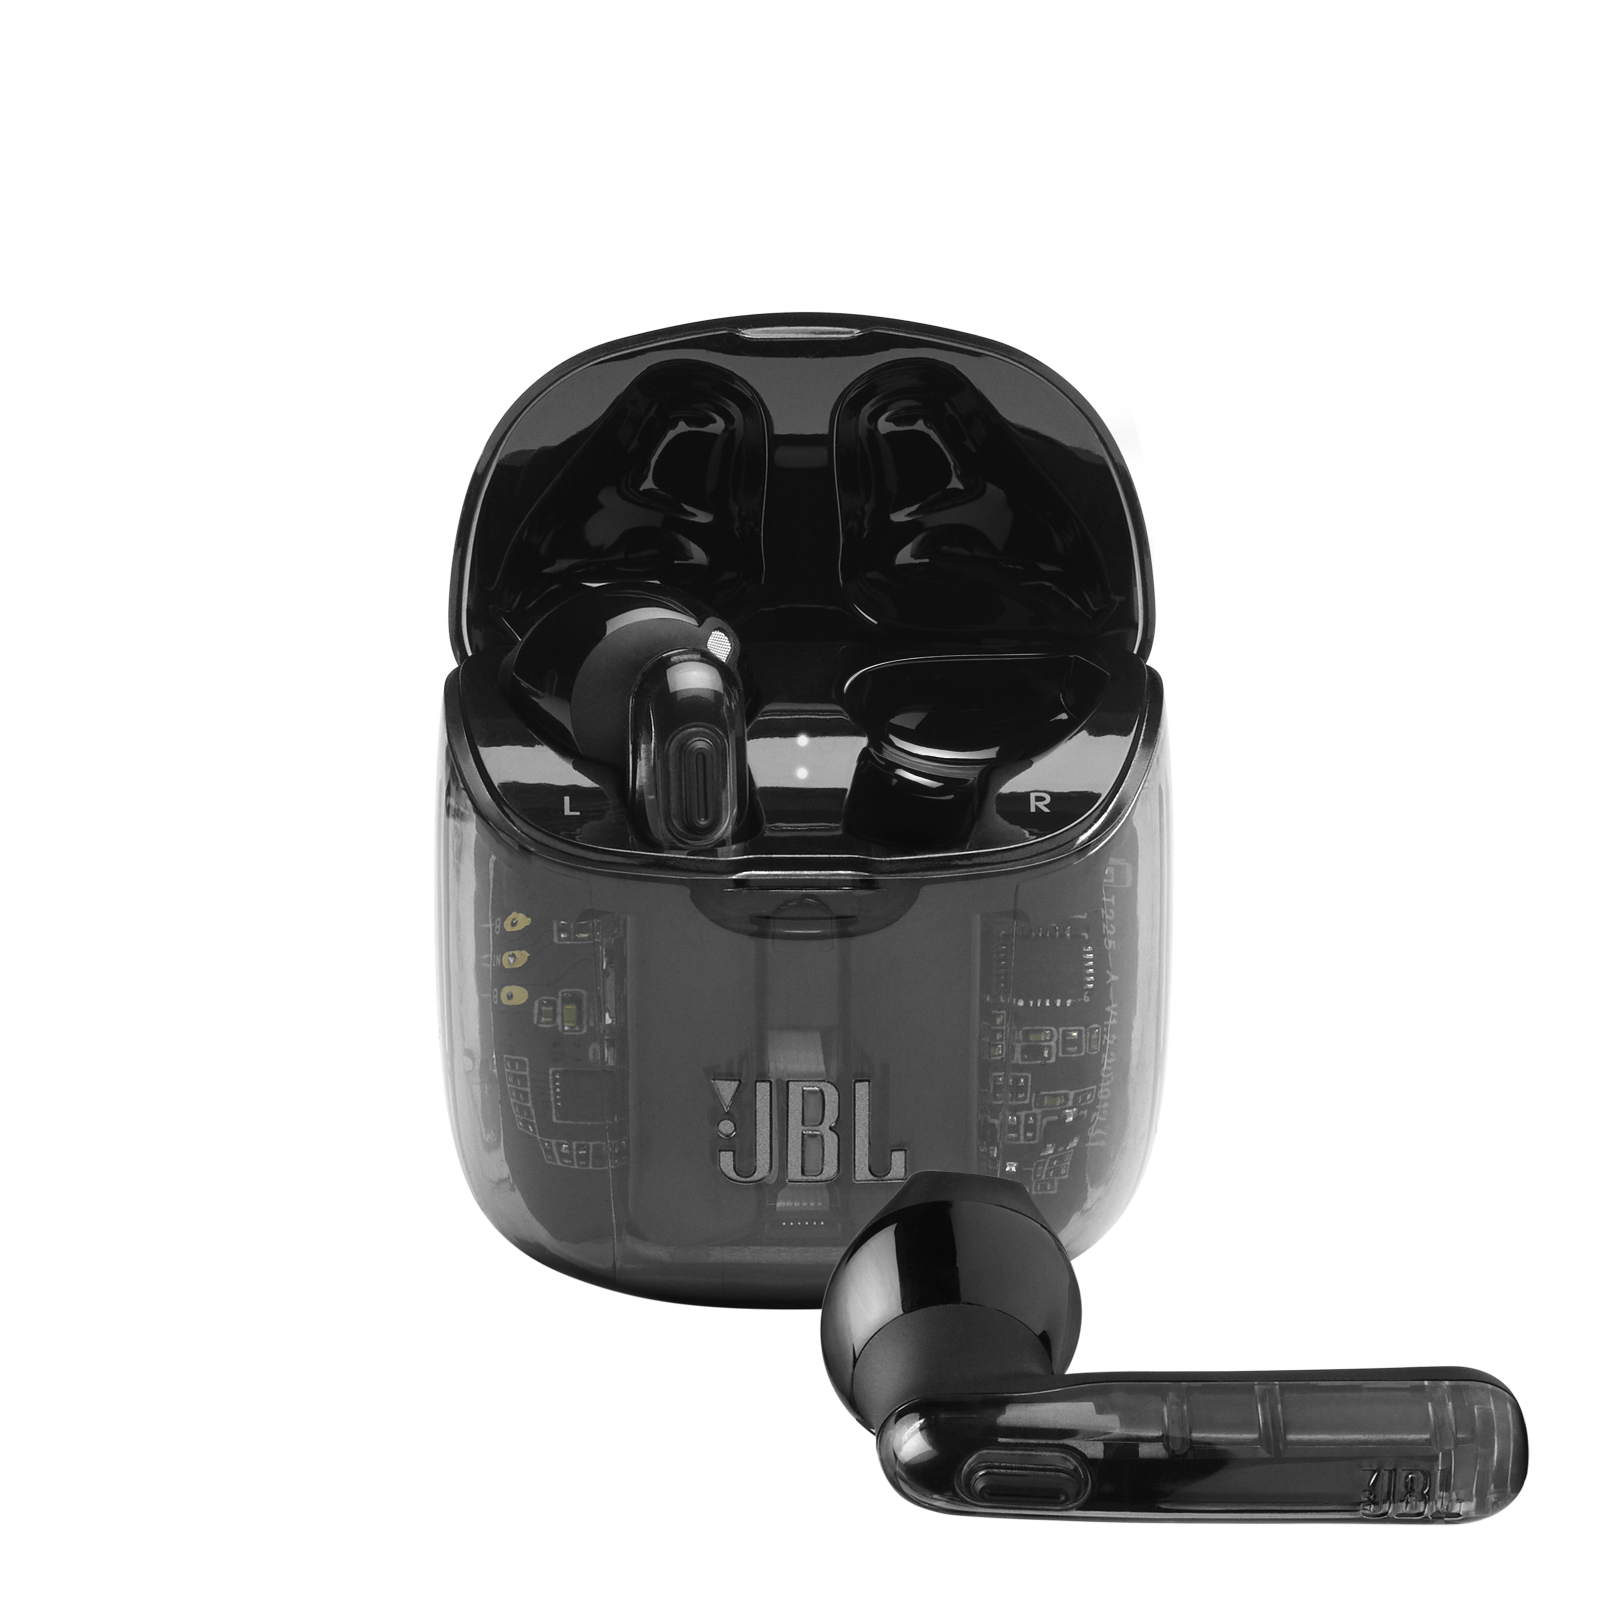 Tune 225TWS Ghost Edition | True wireless earbud headphones